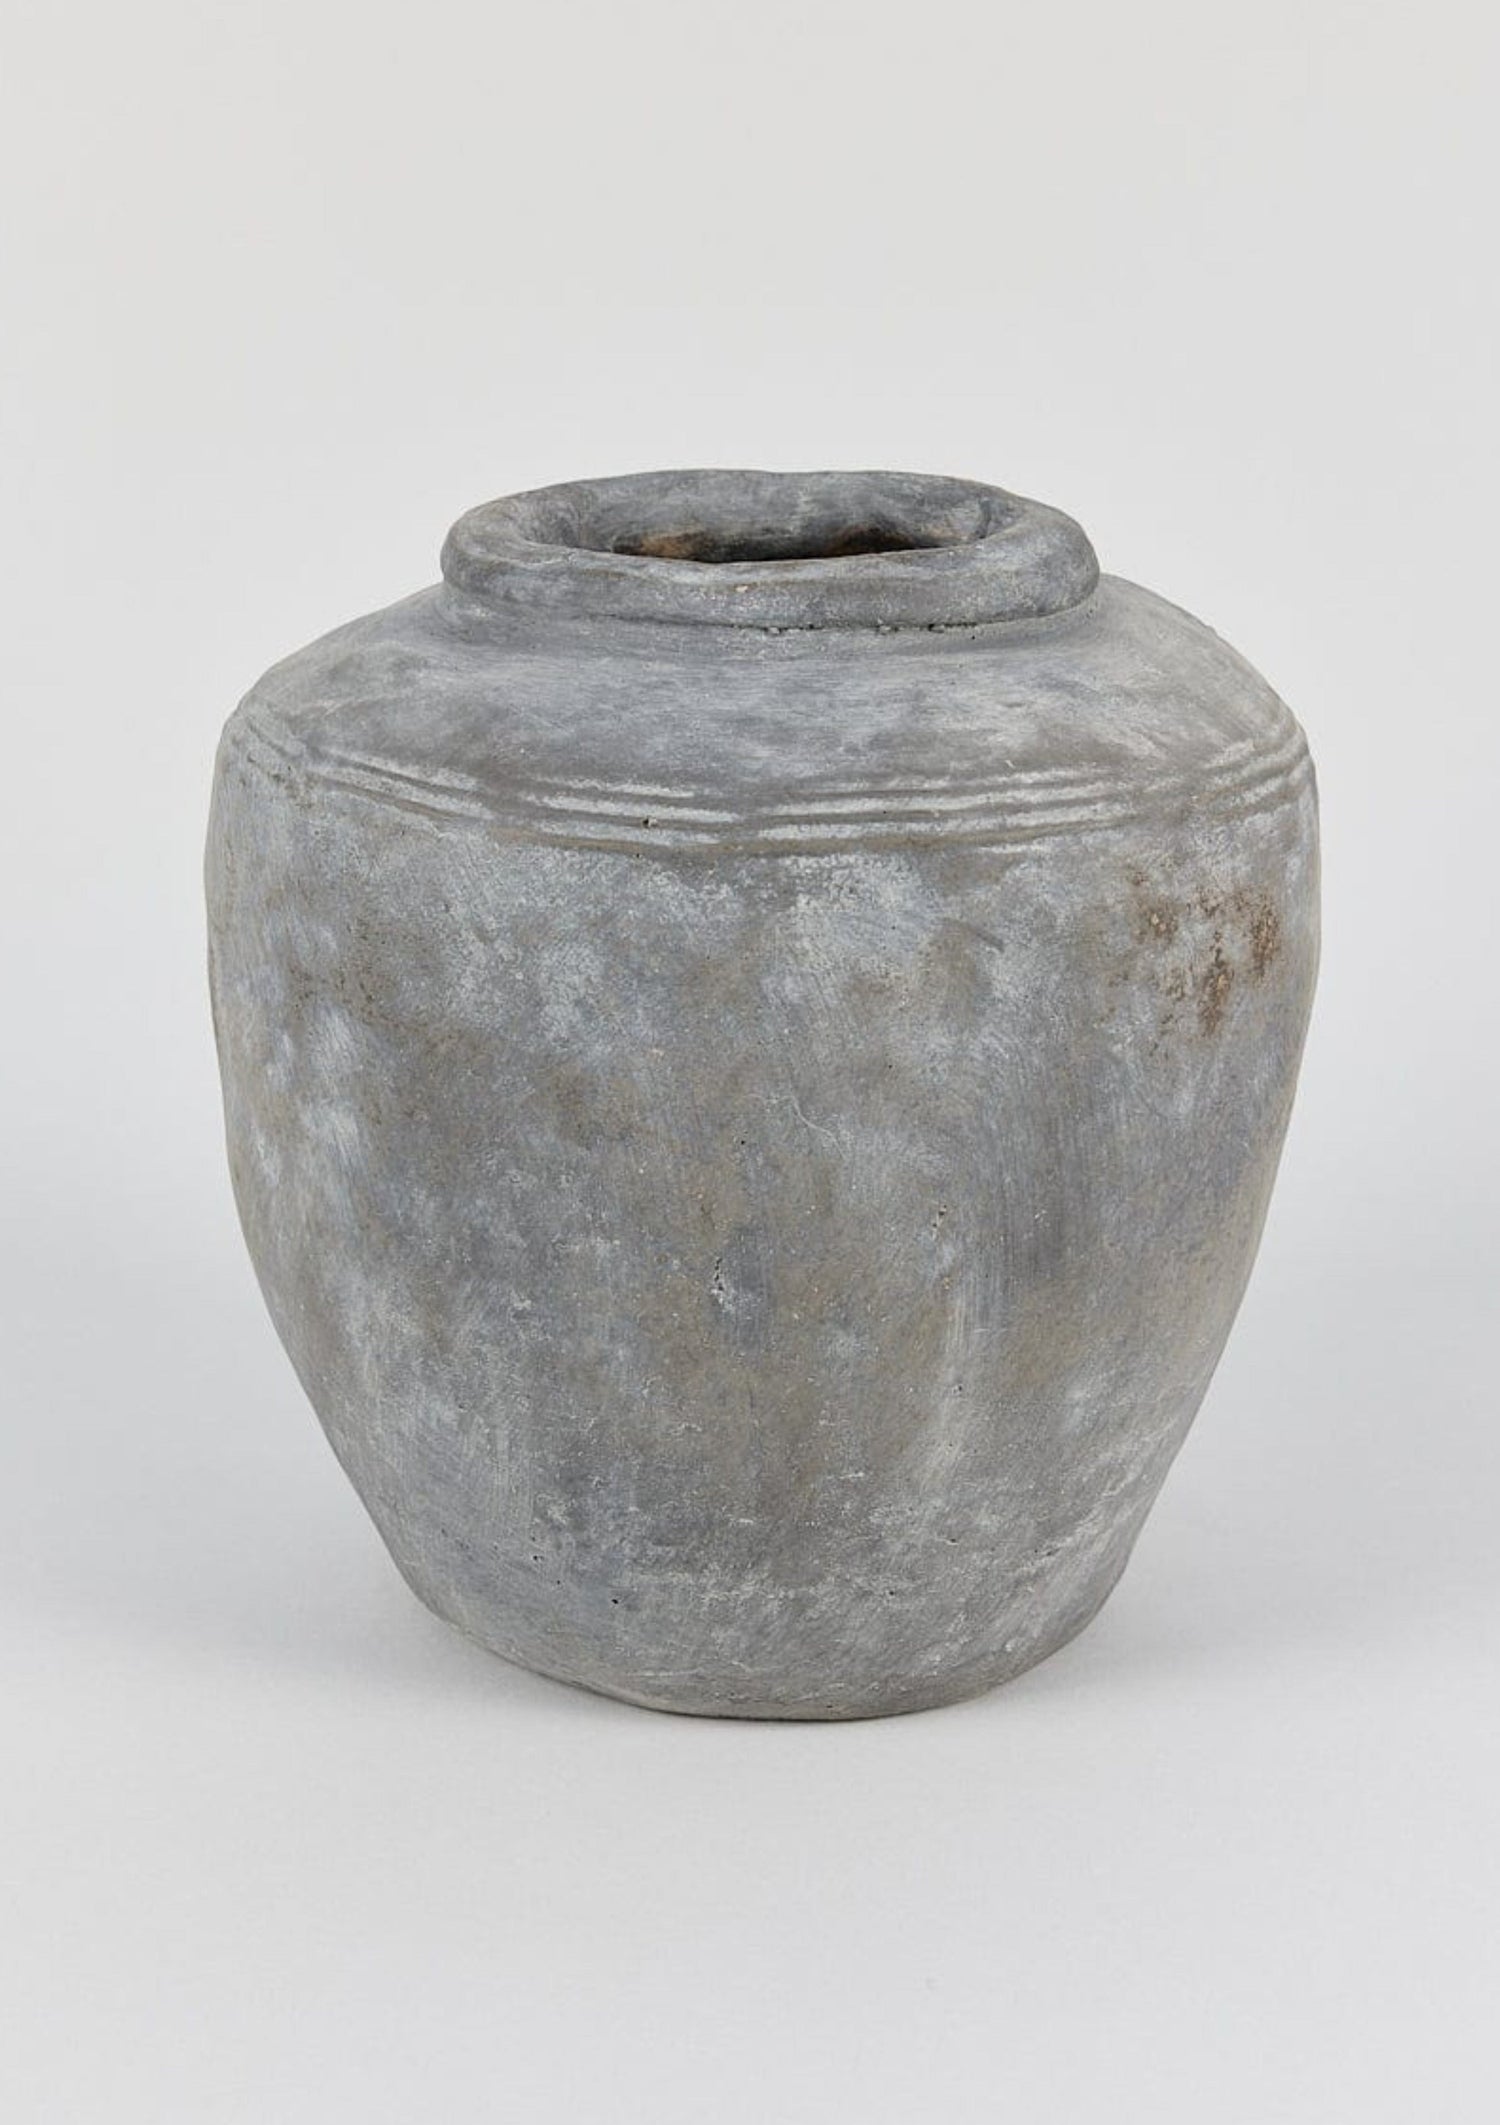 Afloral Rustic Textured Grey Concrete Vase